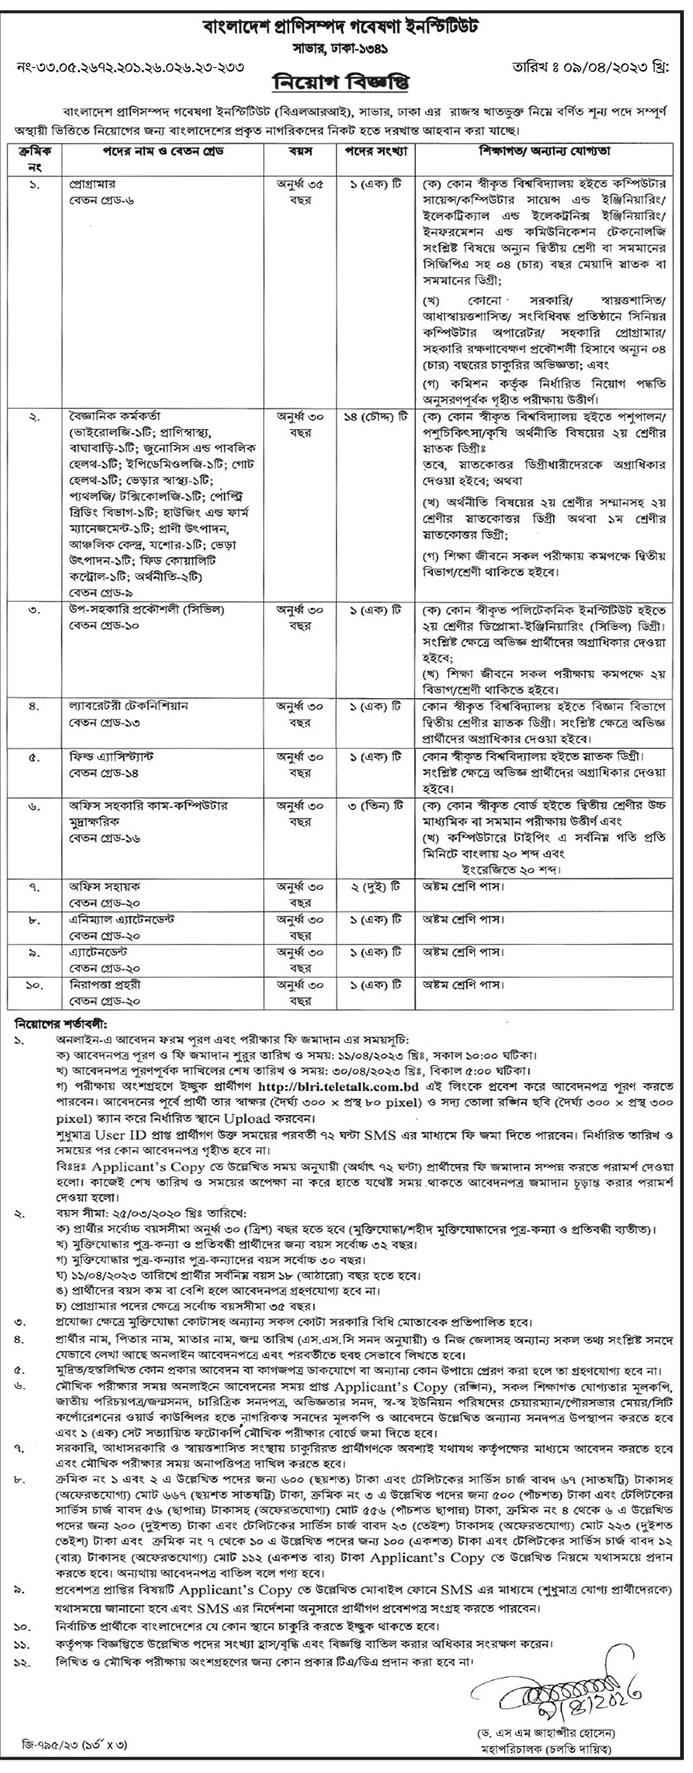 Bangladesh Livestock Research Institute Job Circular